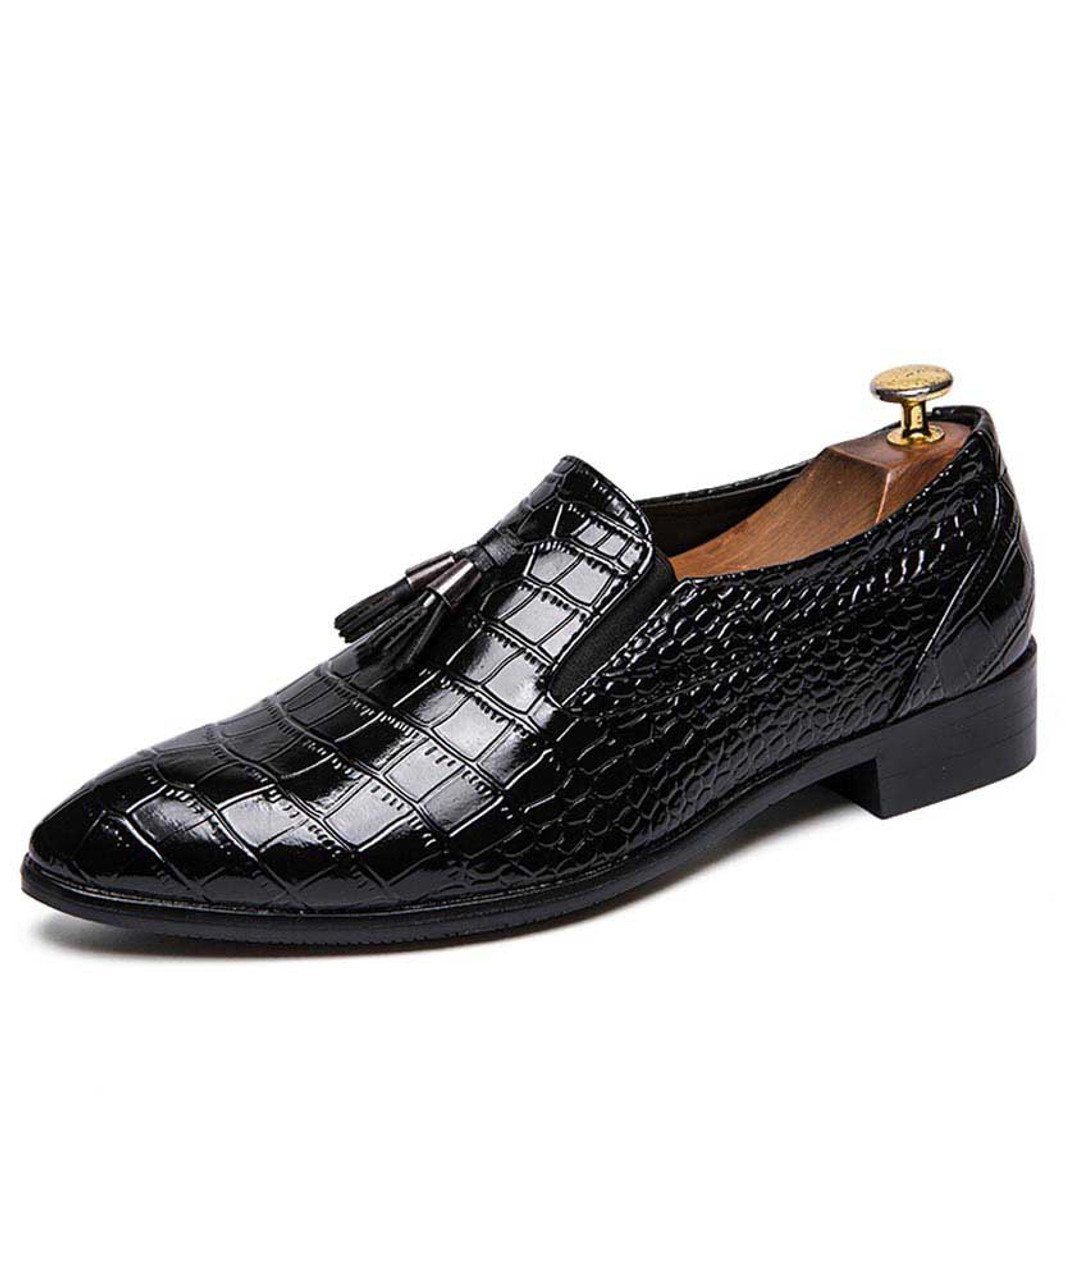 Crocodile Leather Dress For Women, Black 